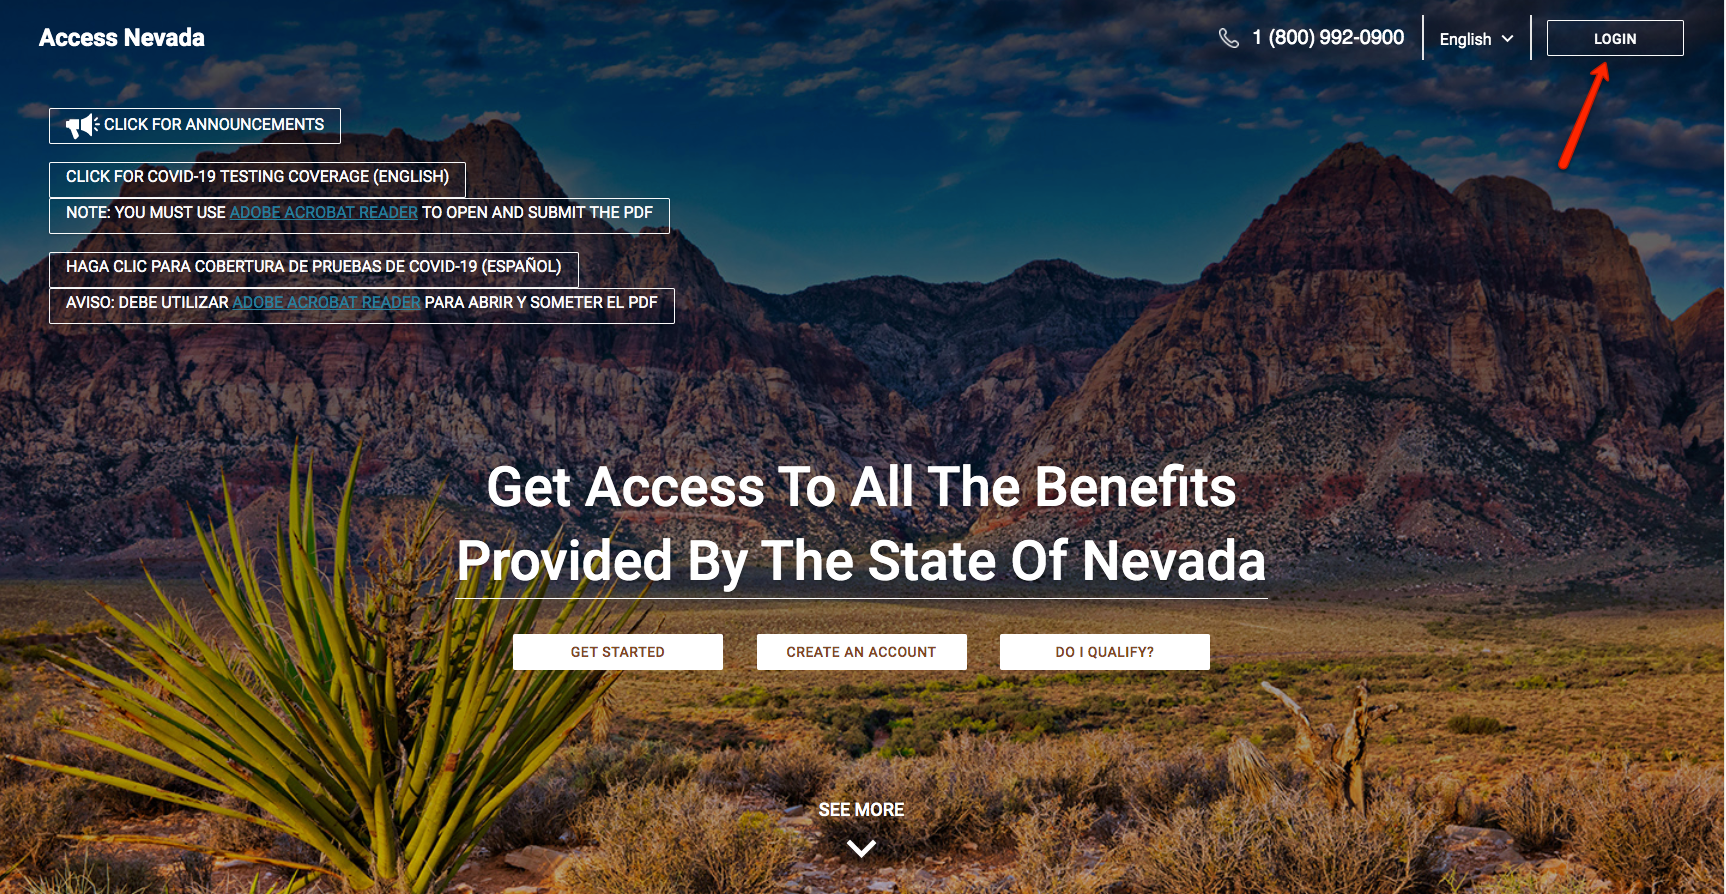 "Access Nevada Login Instructions"